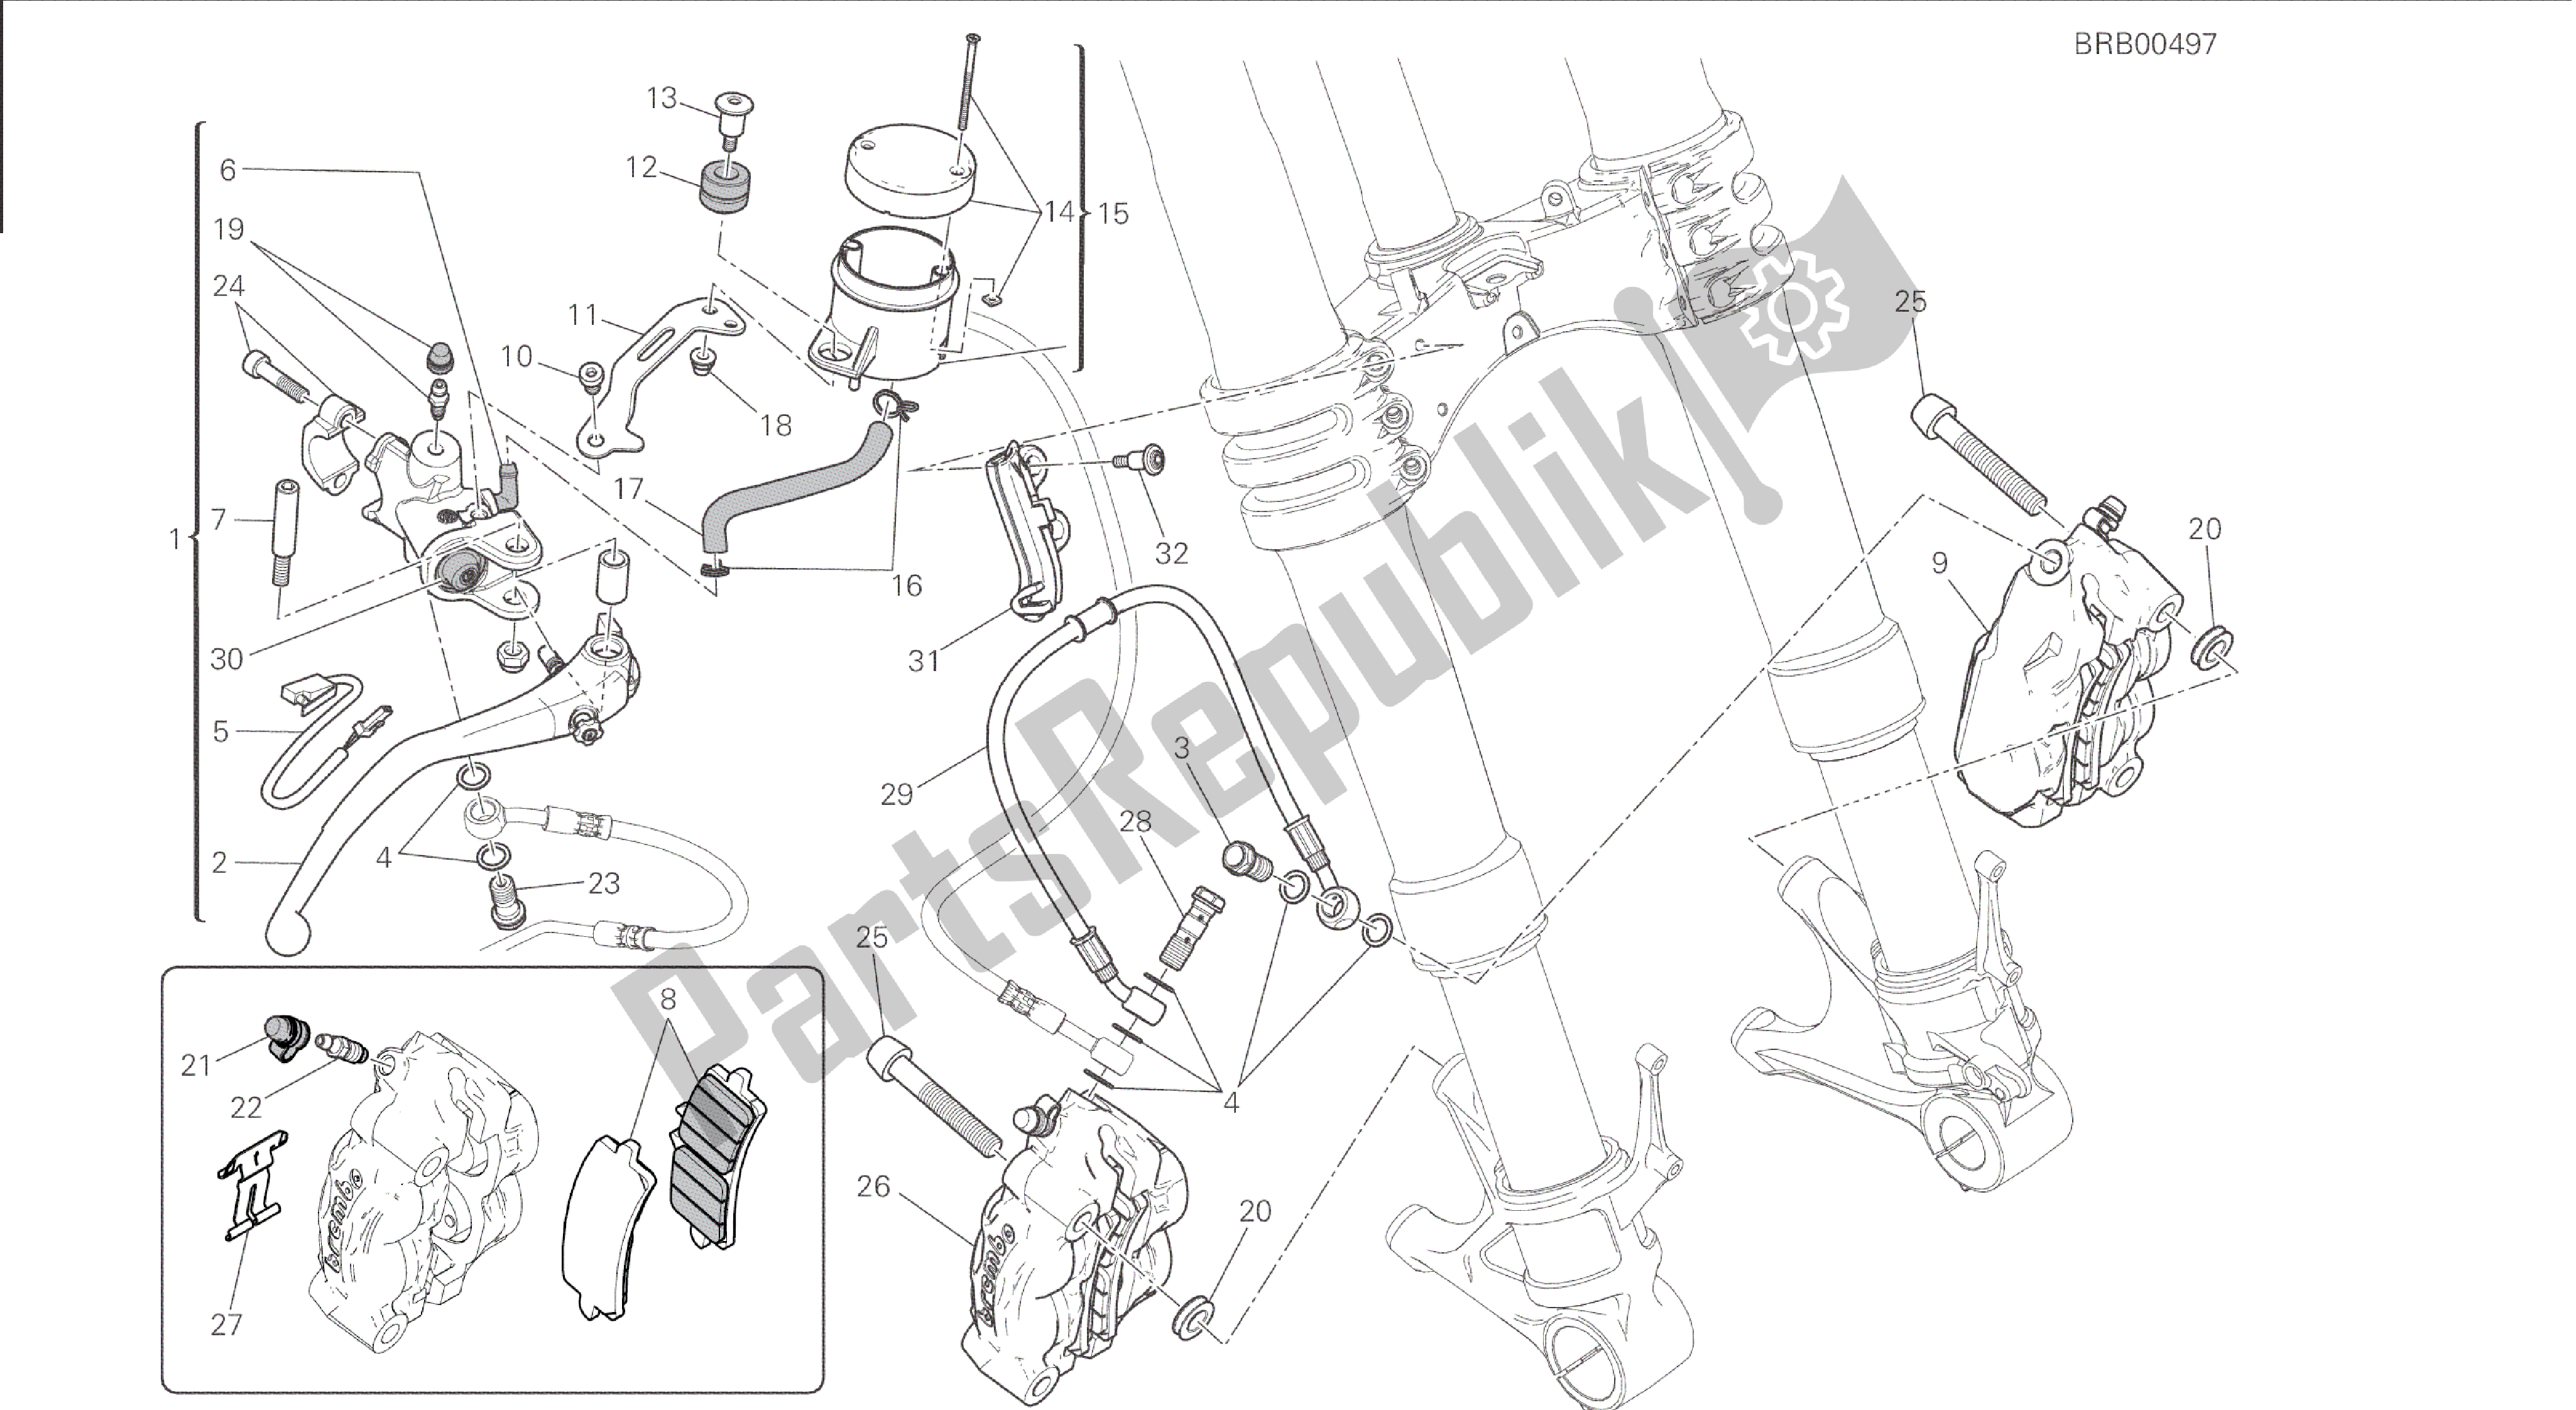 Alle onderdelen voor de Tekening 024 - Freno Anteriore [mod: 1199 R; Xst: Aus, Eur, Fra, Jap, Twn] Groepsframe van de Ducati Panigale 1198 2015